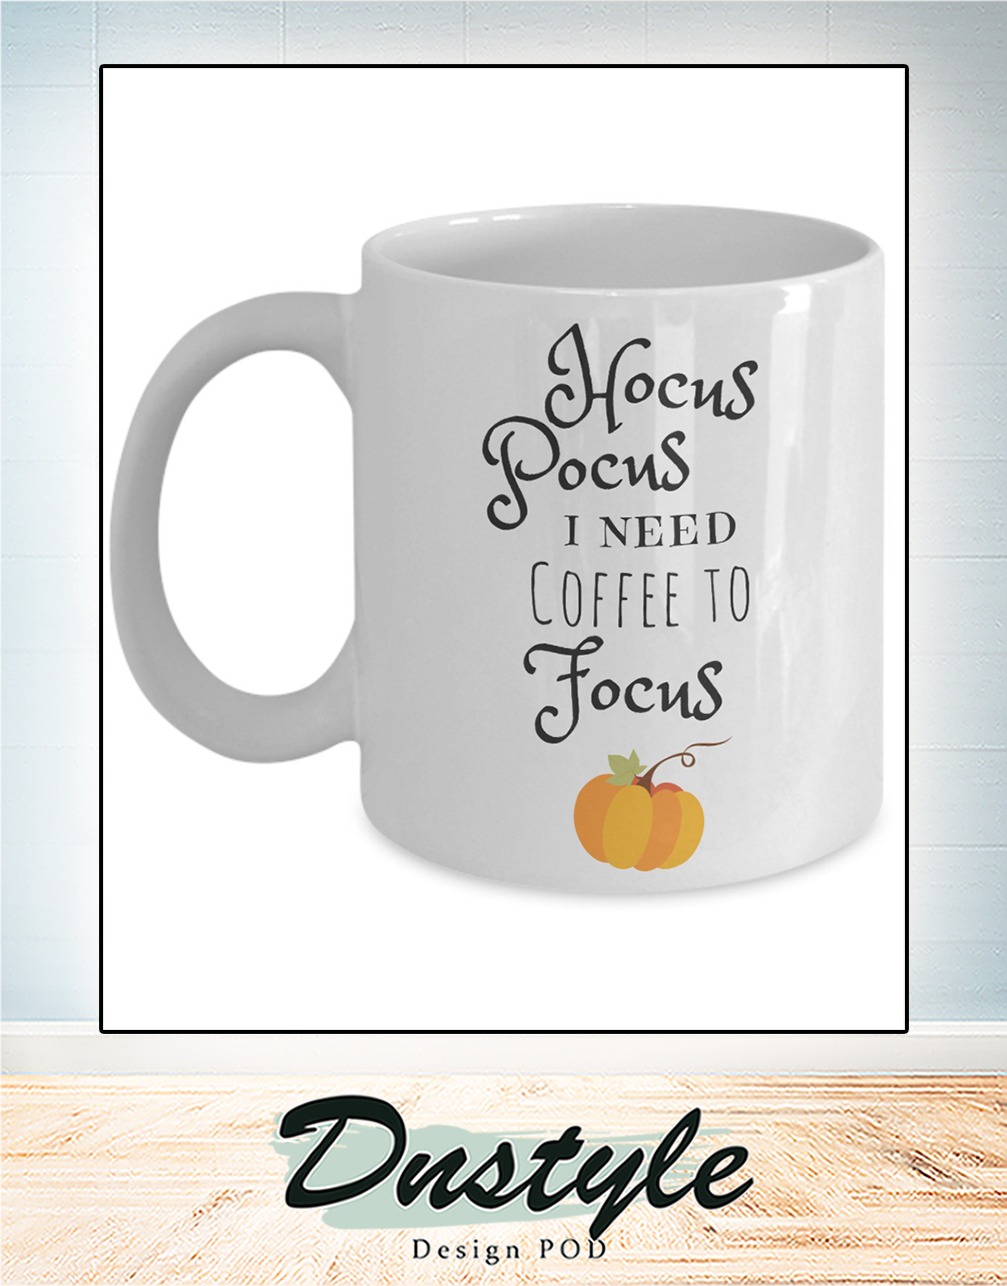 Hocus pocus I need coffee to focus mug 1